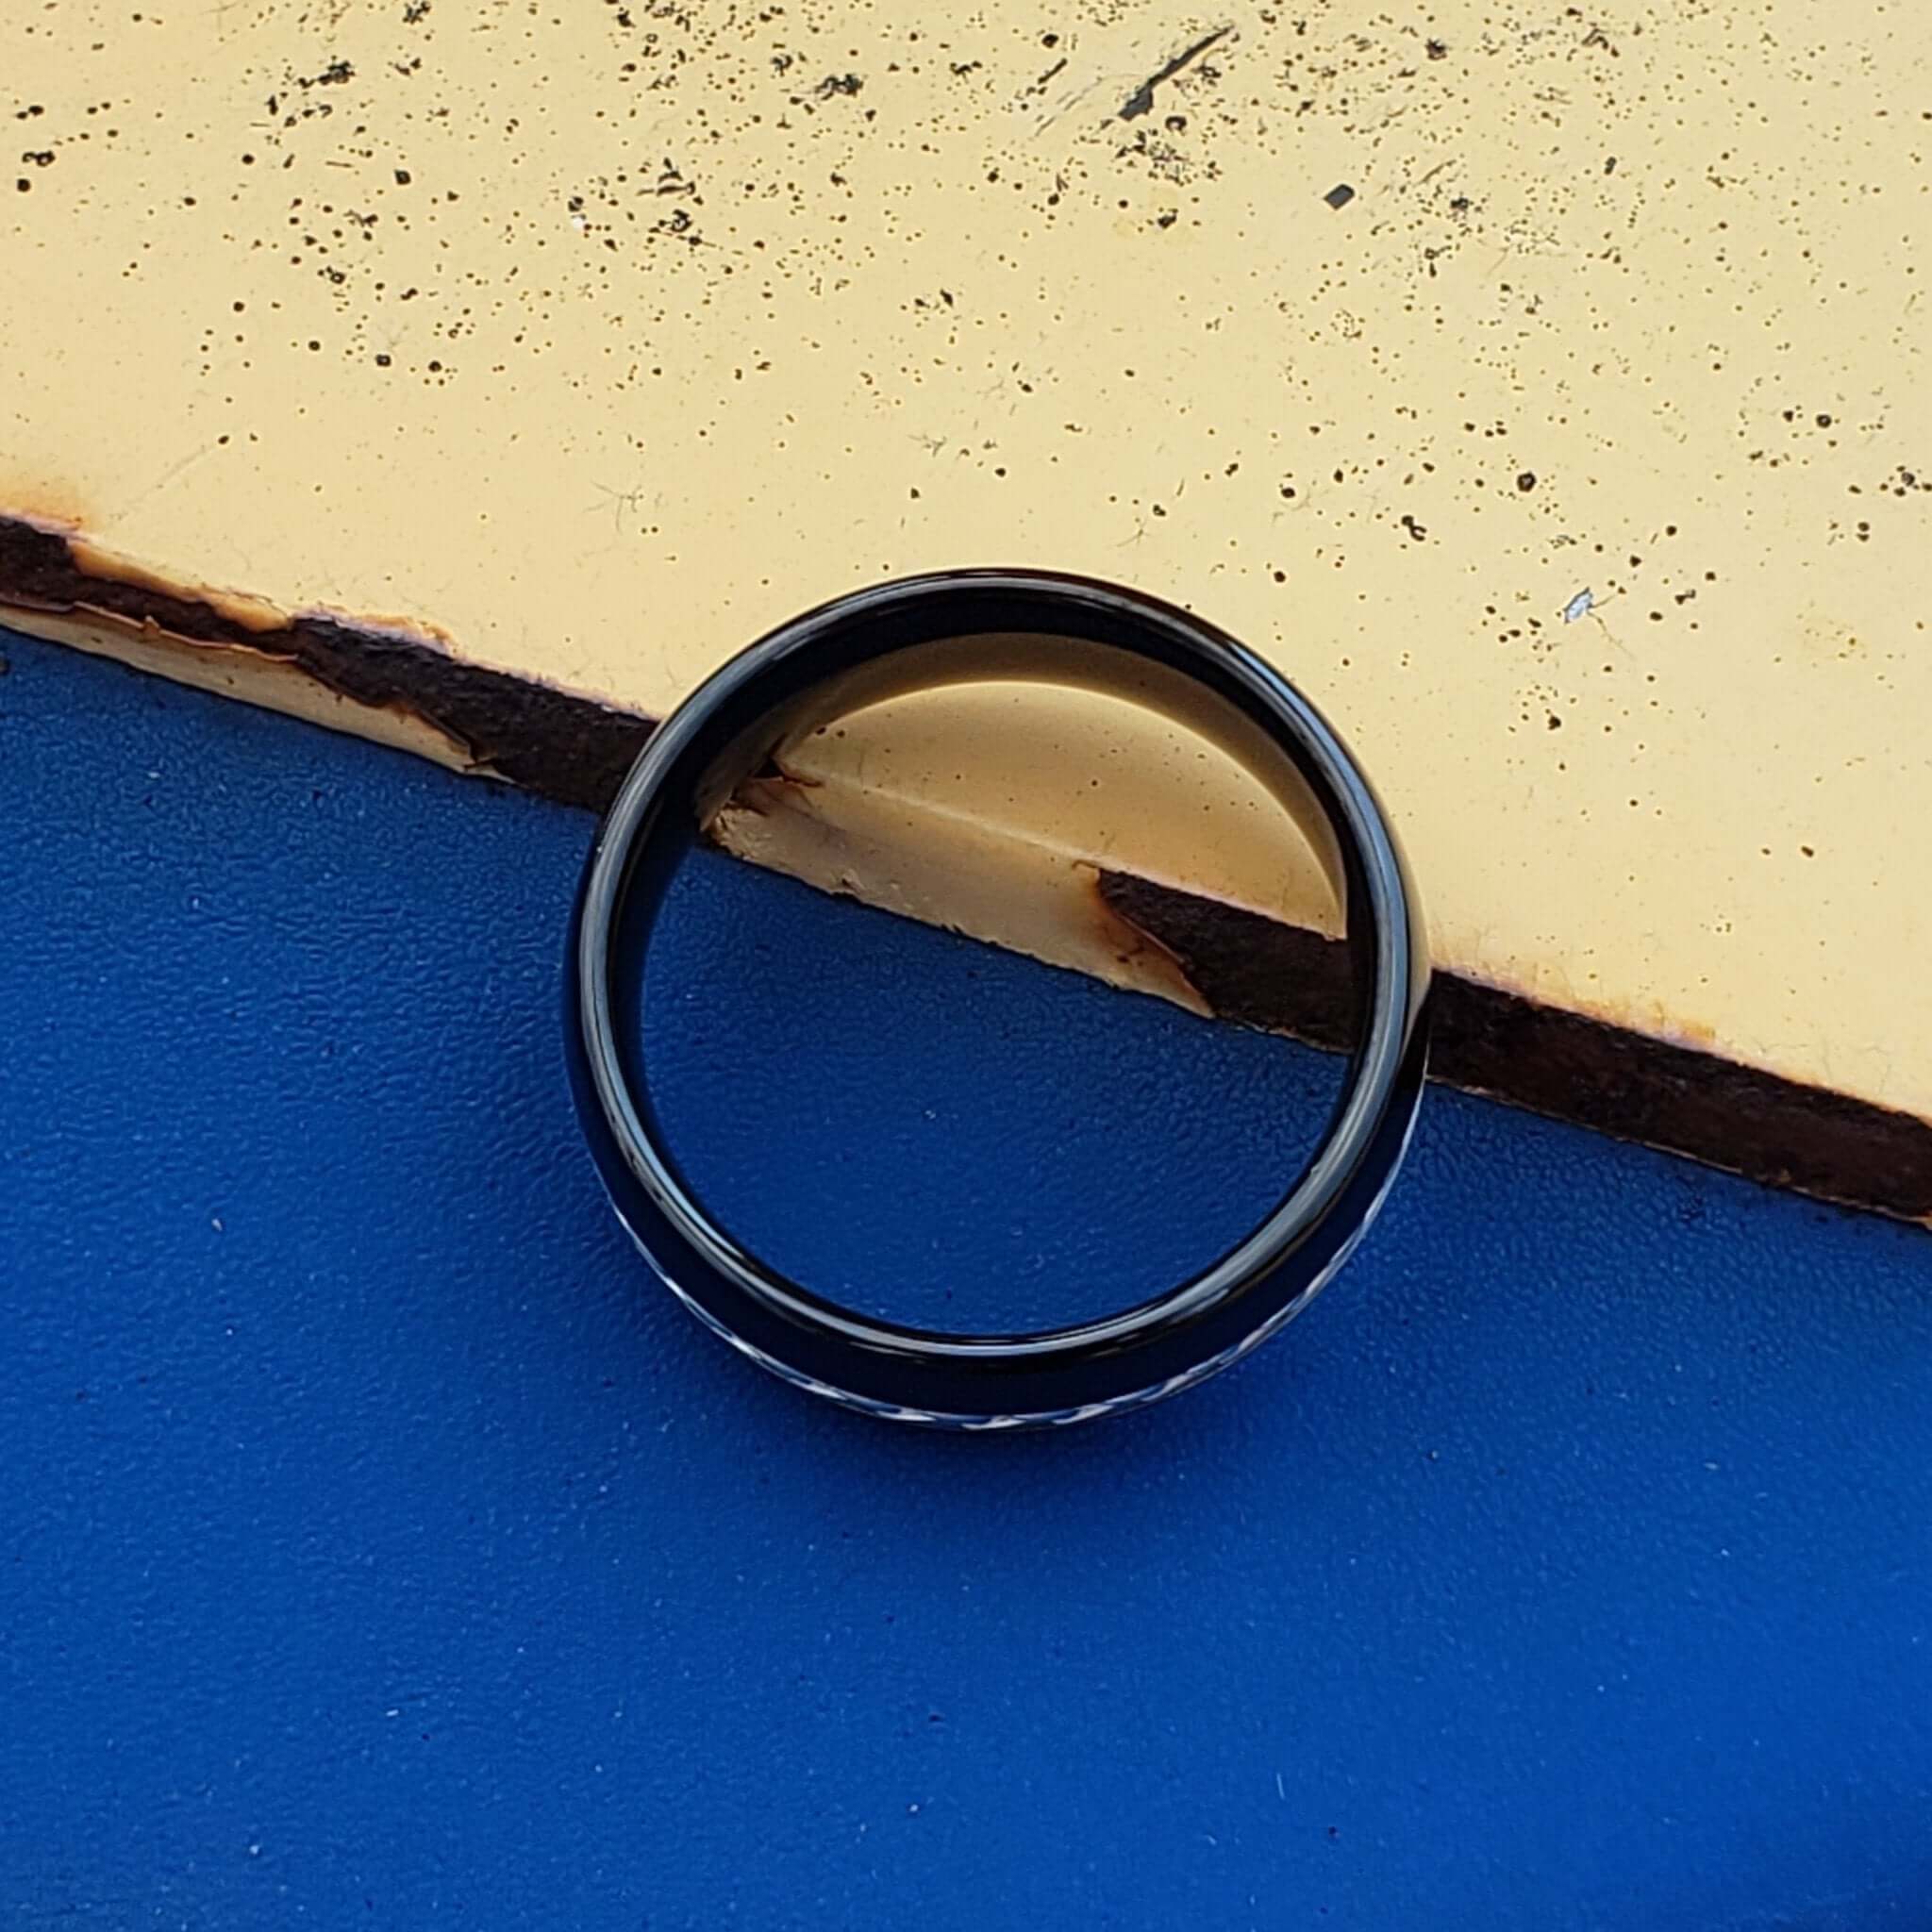 DETOR Braided Tungsten Wedding Band Silver Inlay Black Ring - Gaboni Jewelers